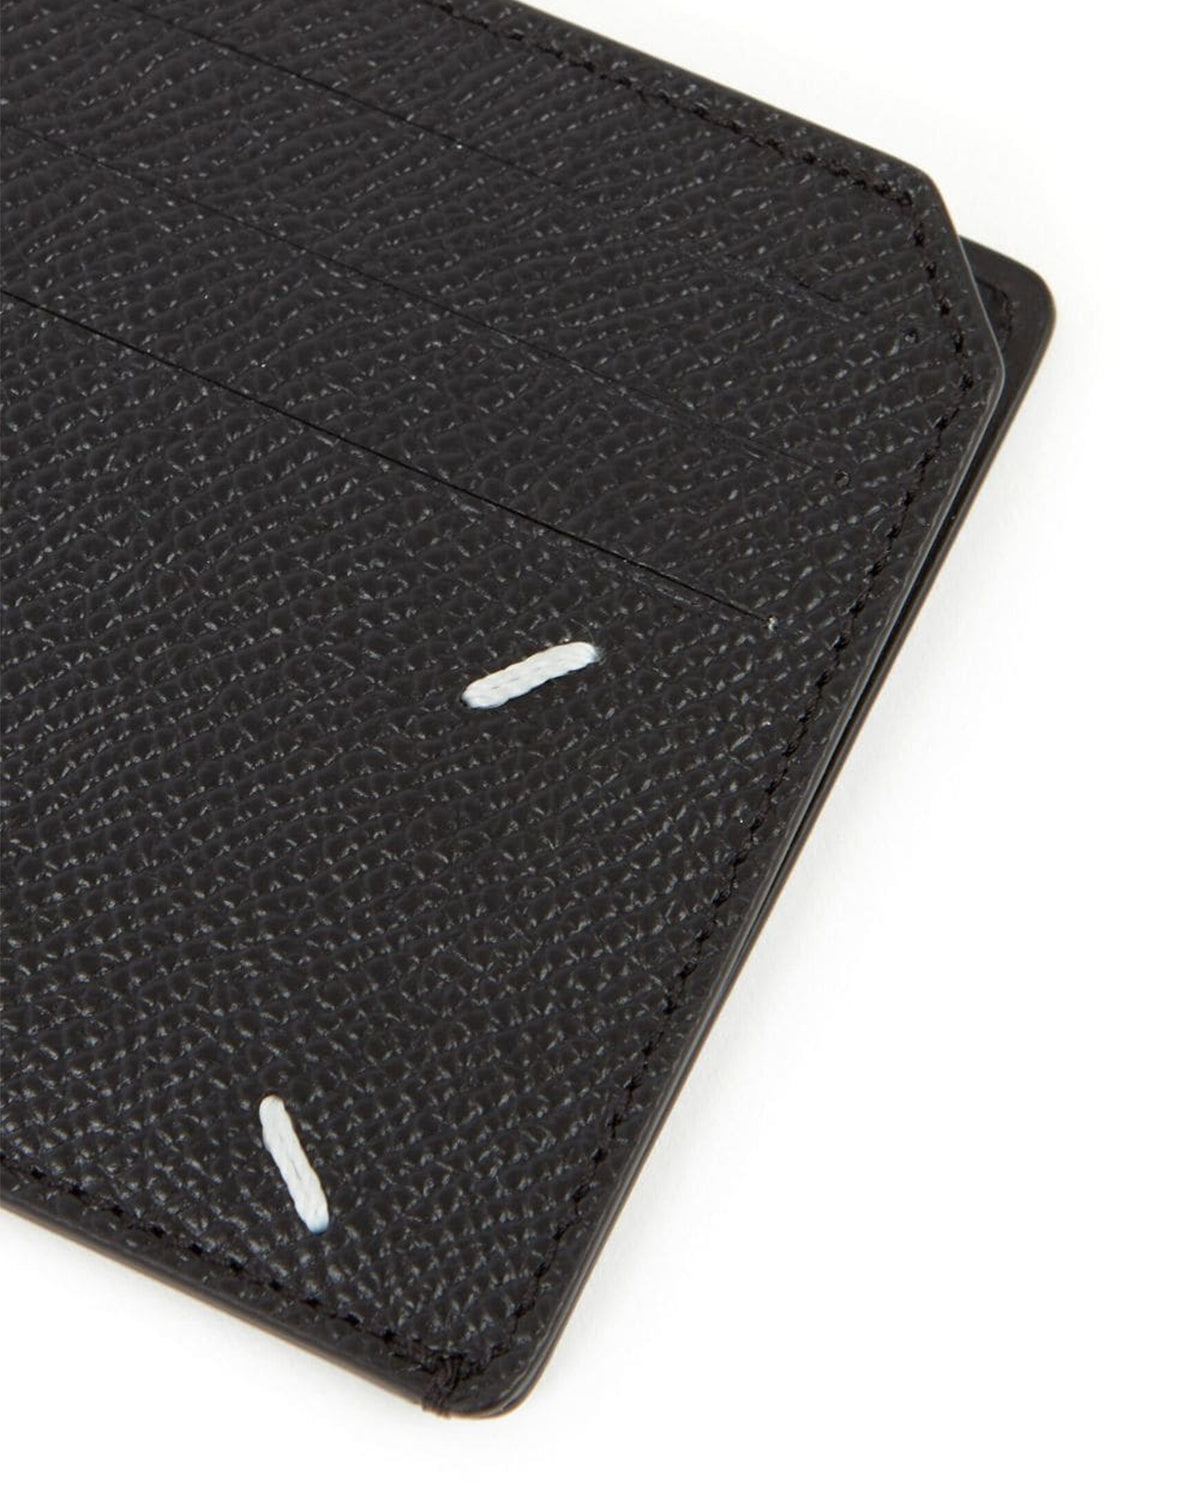 Calf Leather Slim Gap Card Holder - Black